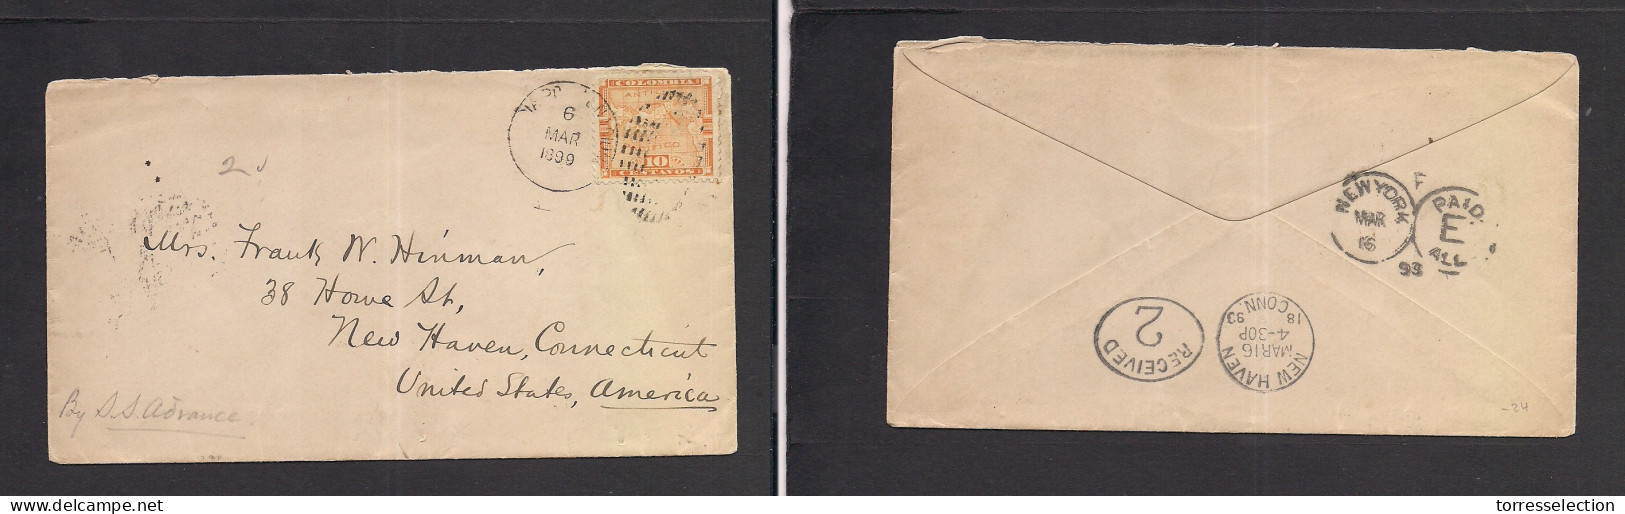 PANAMA. 1899 (6 March) APN - USA, New Haven, CT (16 March) Fkd Env. XSALE. - Panama